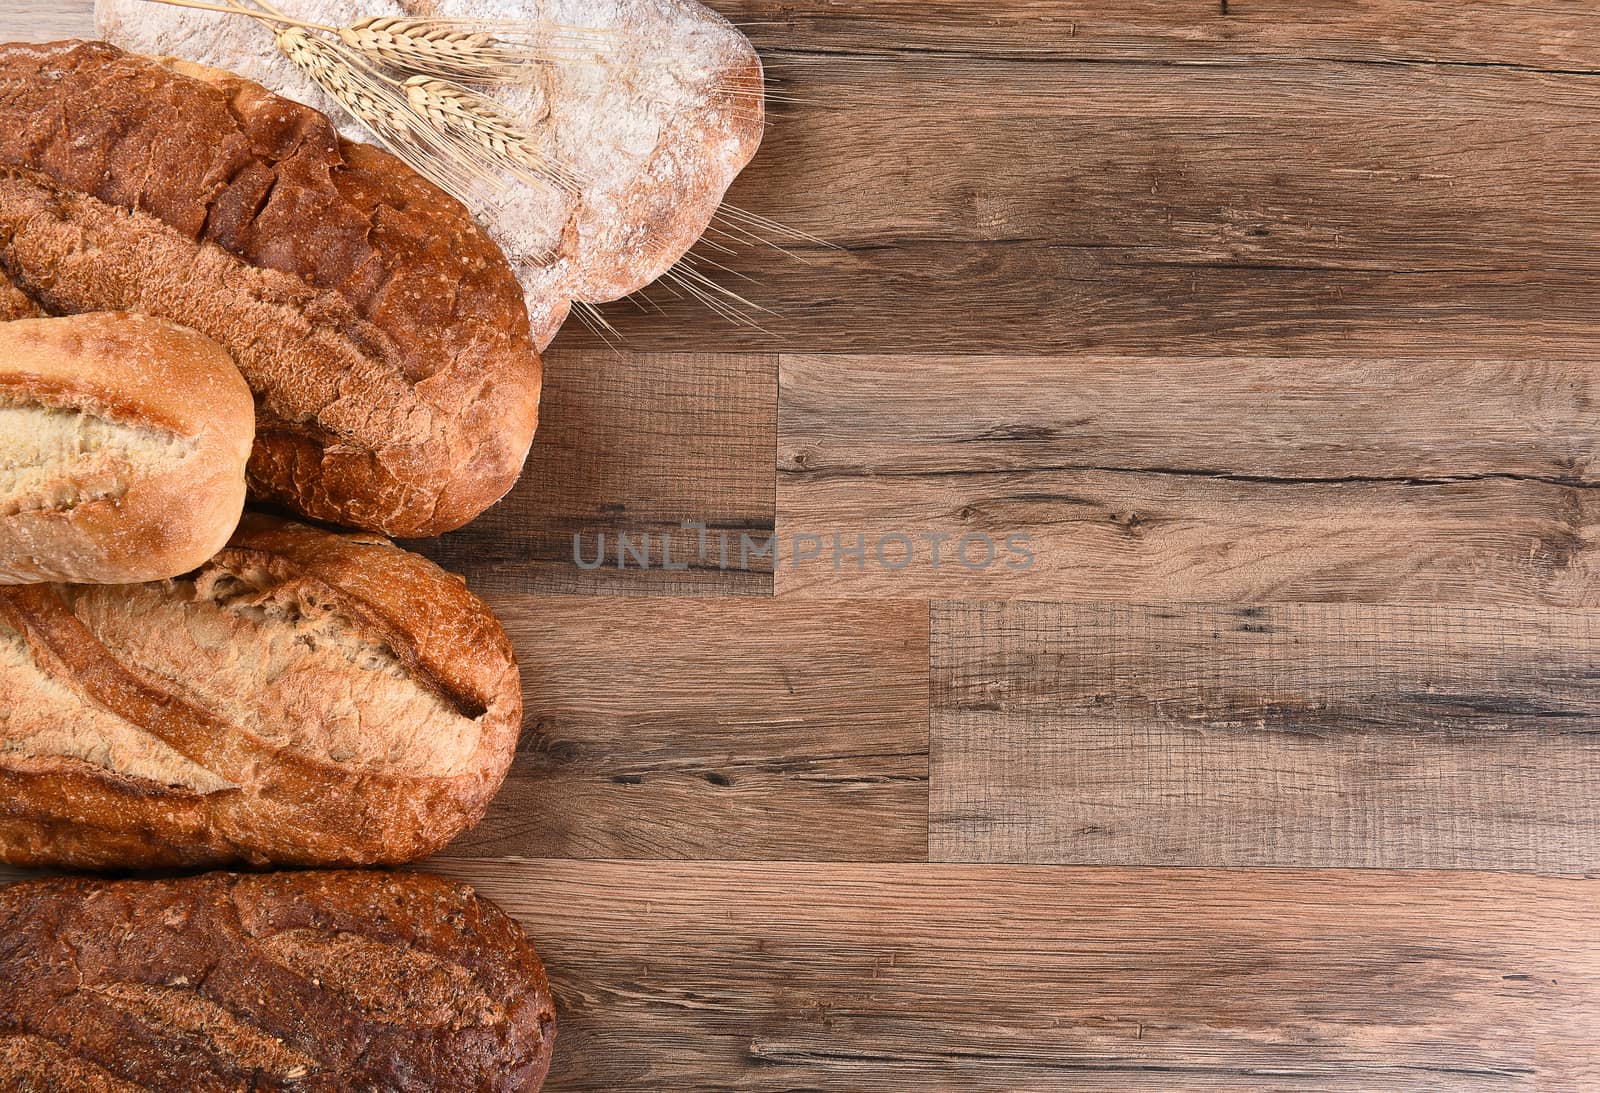 Five Loaves of Bread by sCukrov